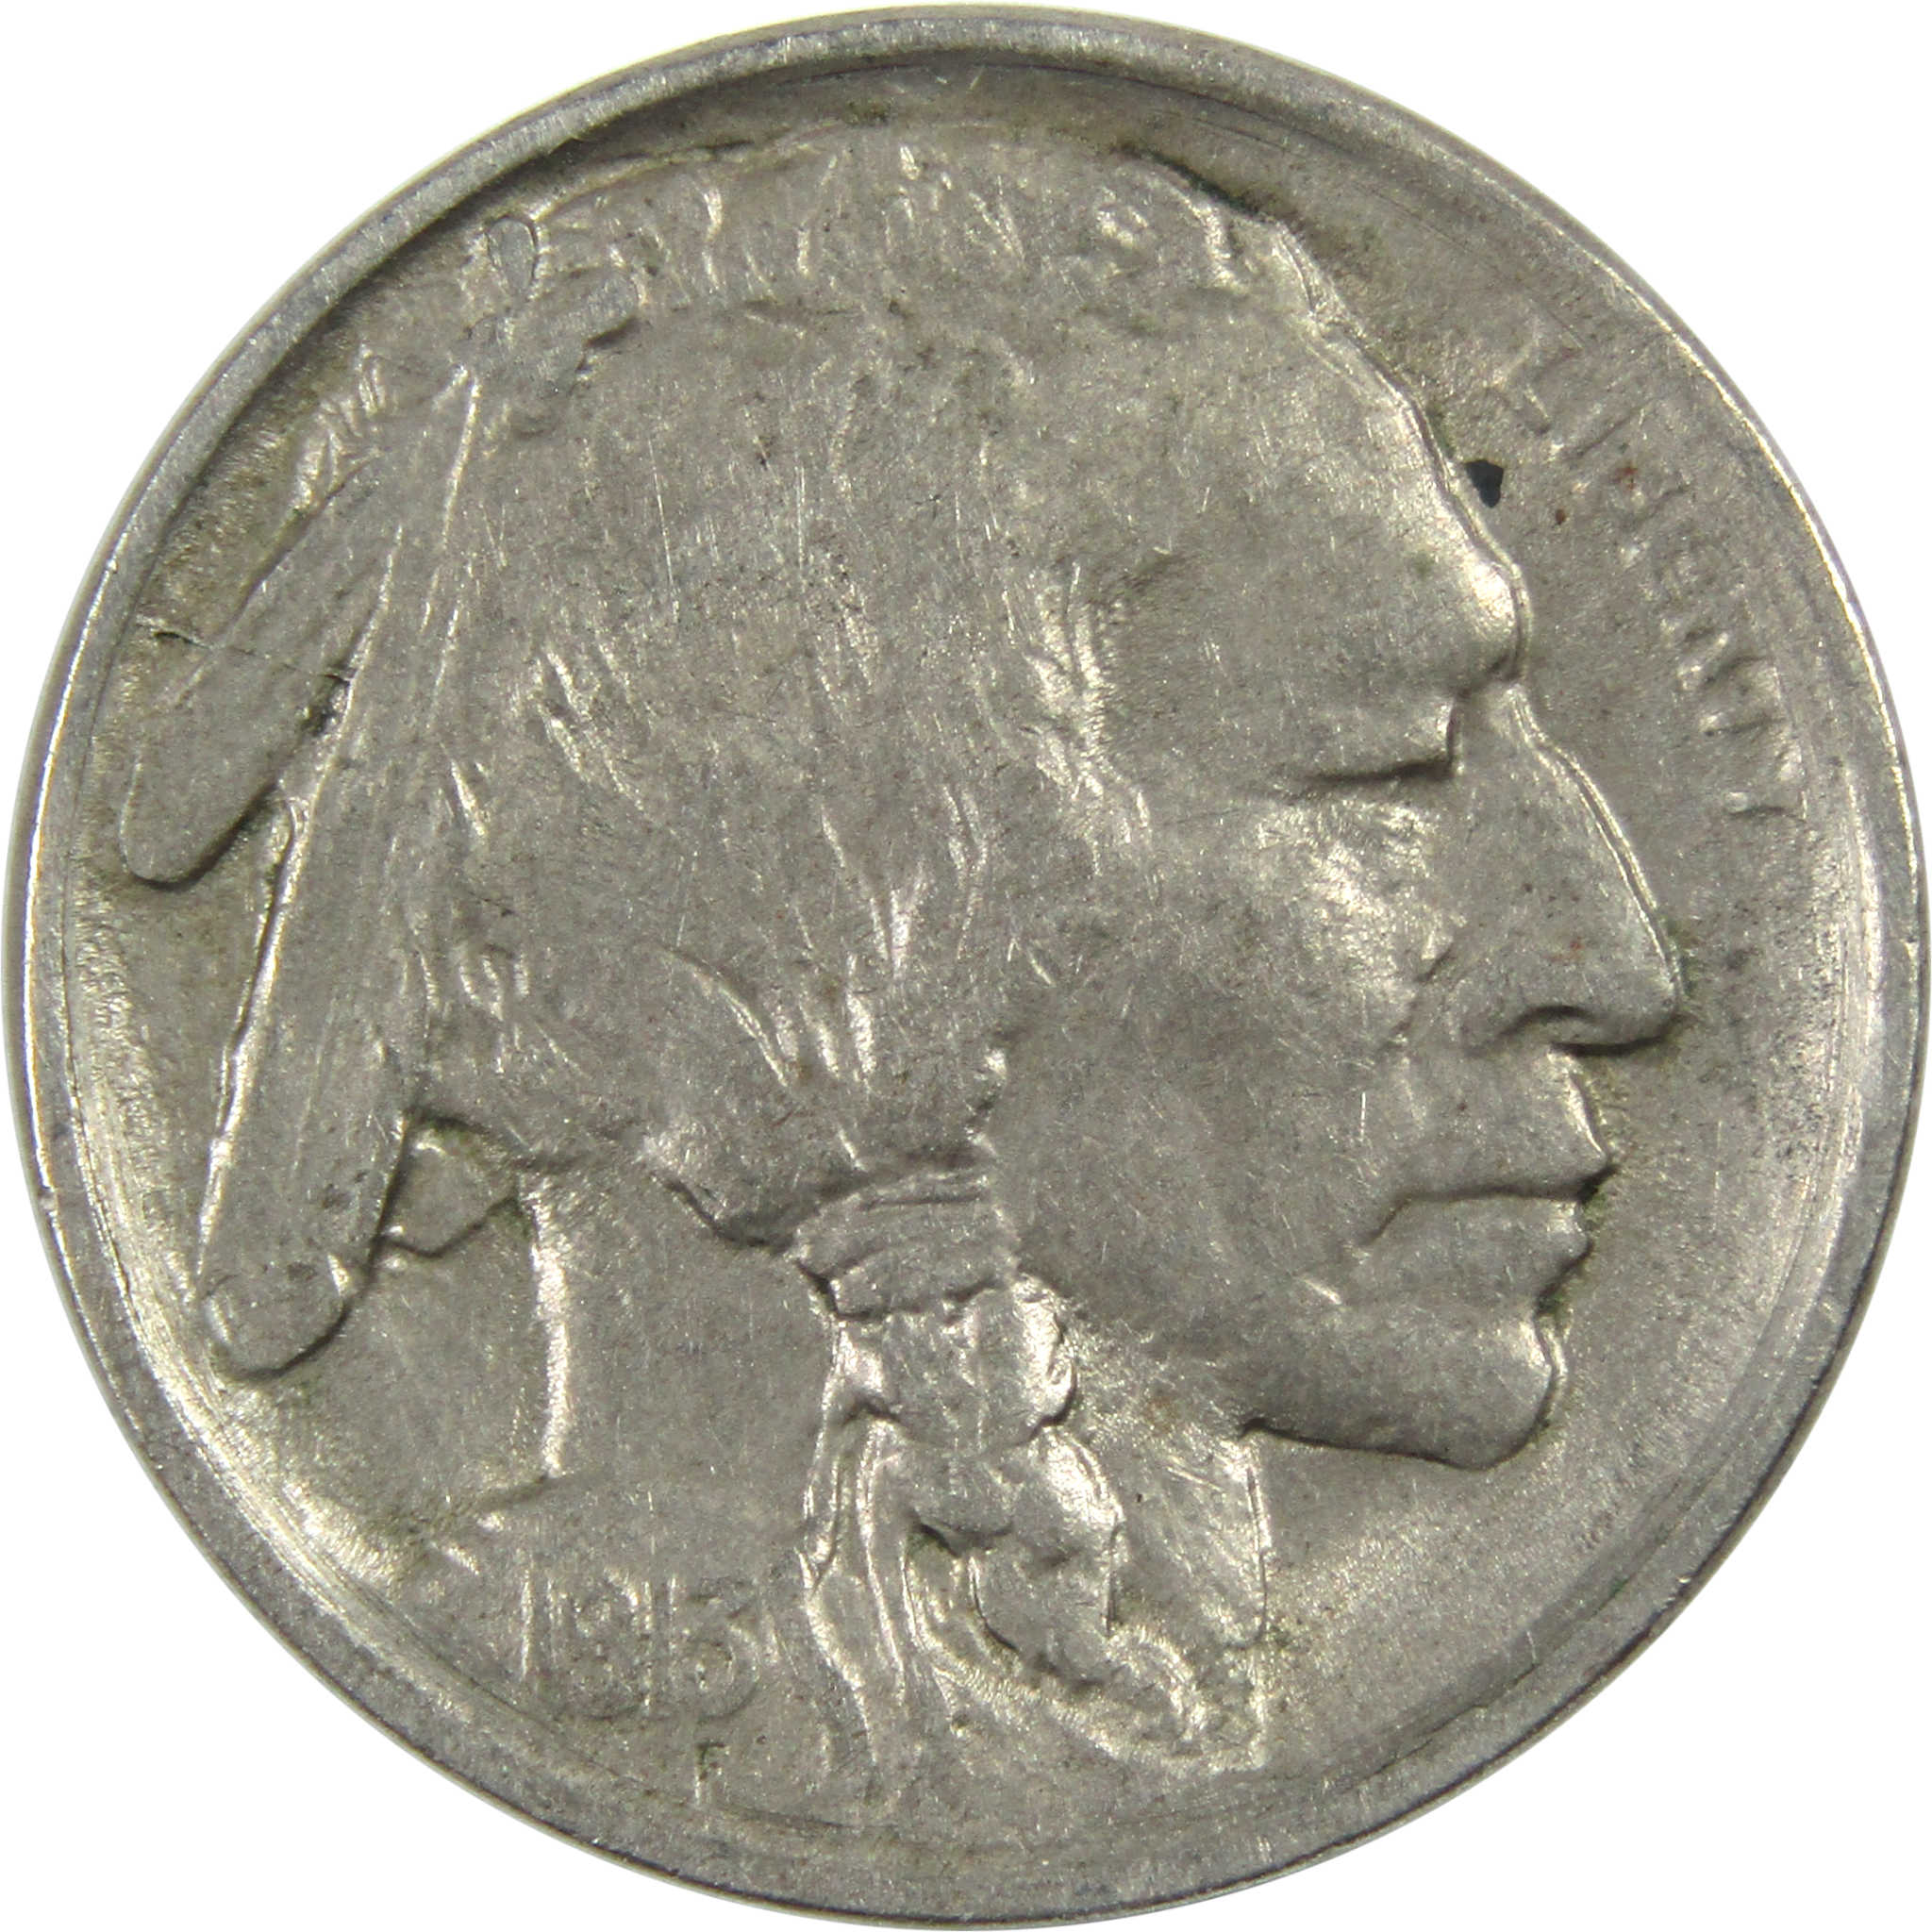 1913 Type 1 Indian Head Buffalo Nickel VF Very Fine 5c Coin SKU:I12991